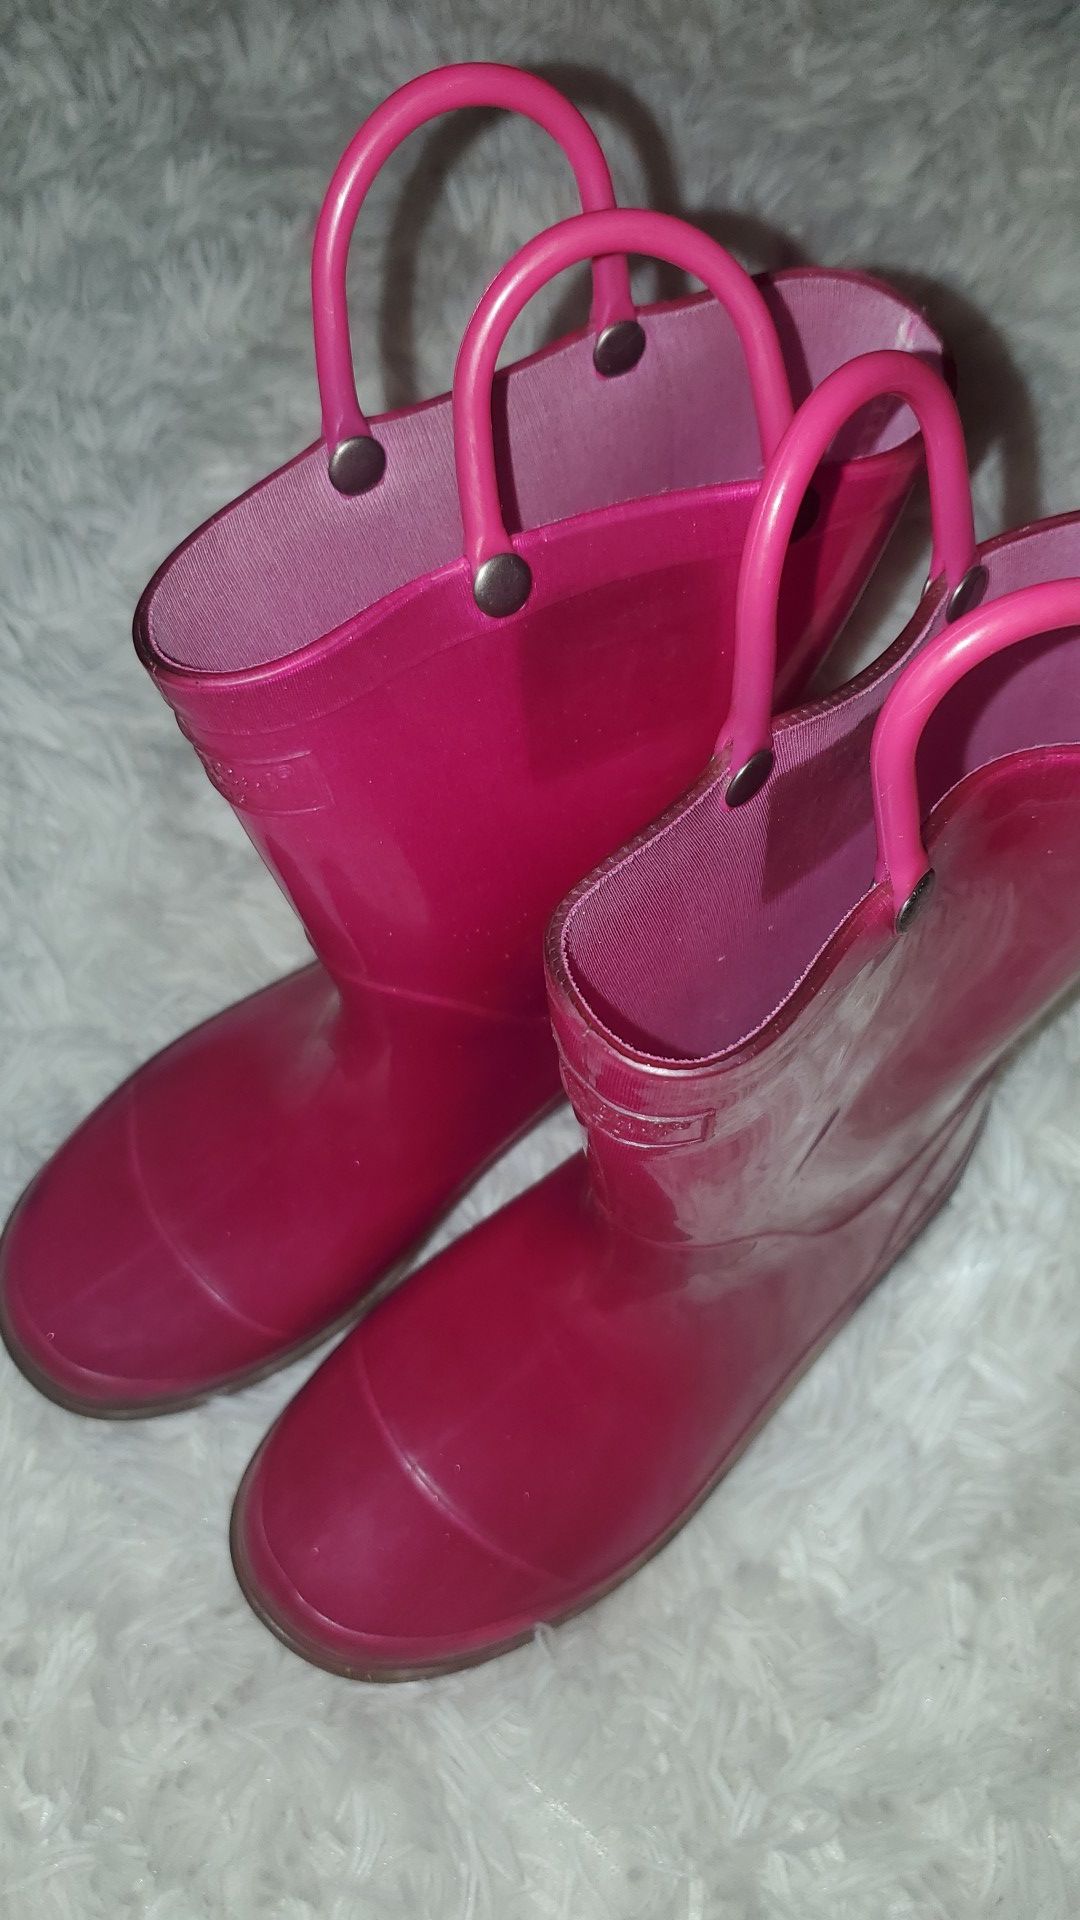 Girl's raining boots